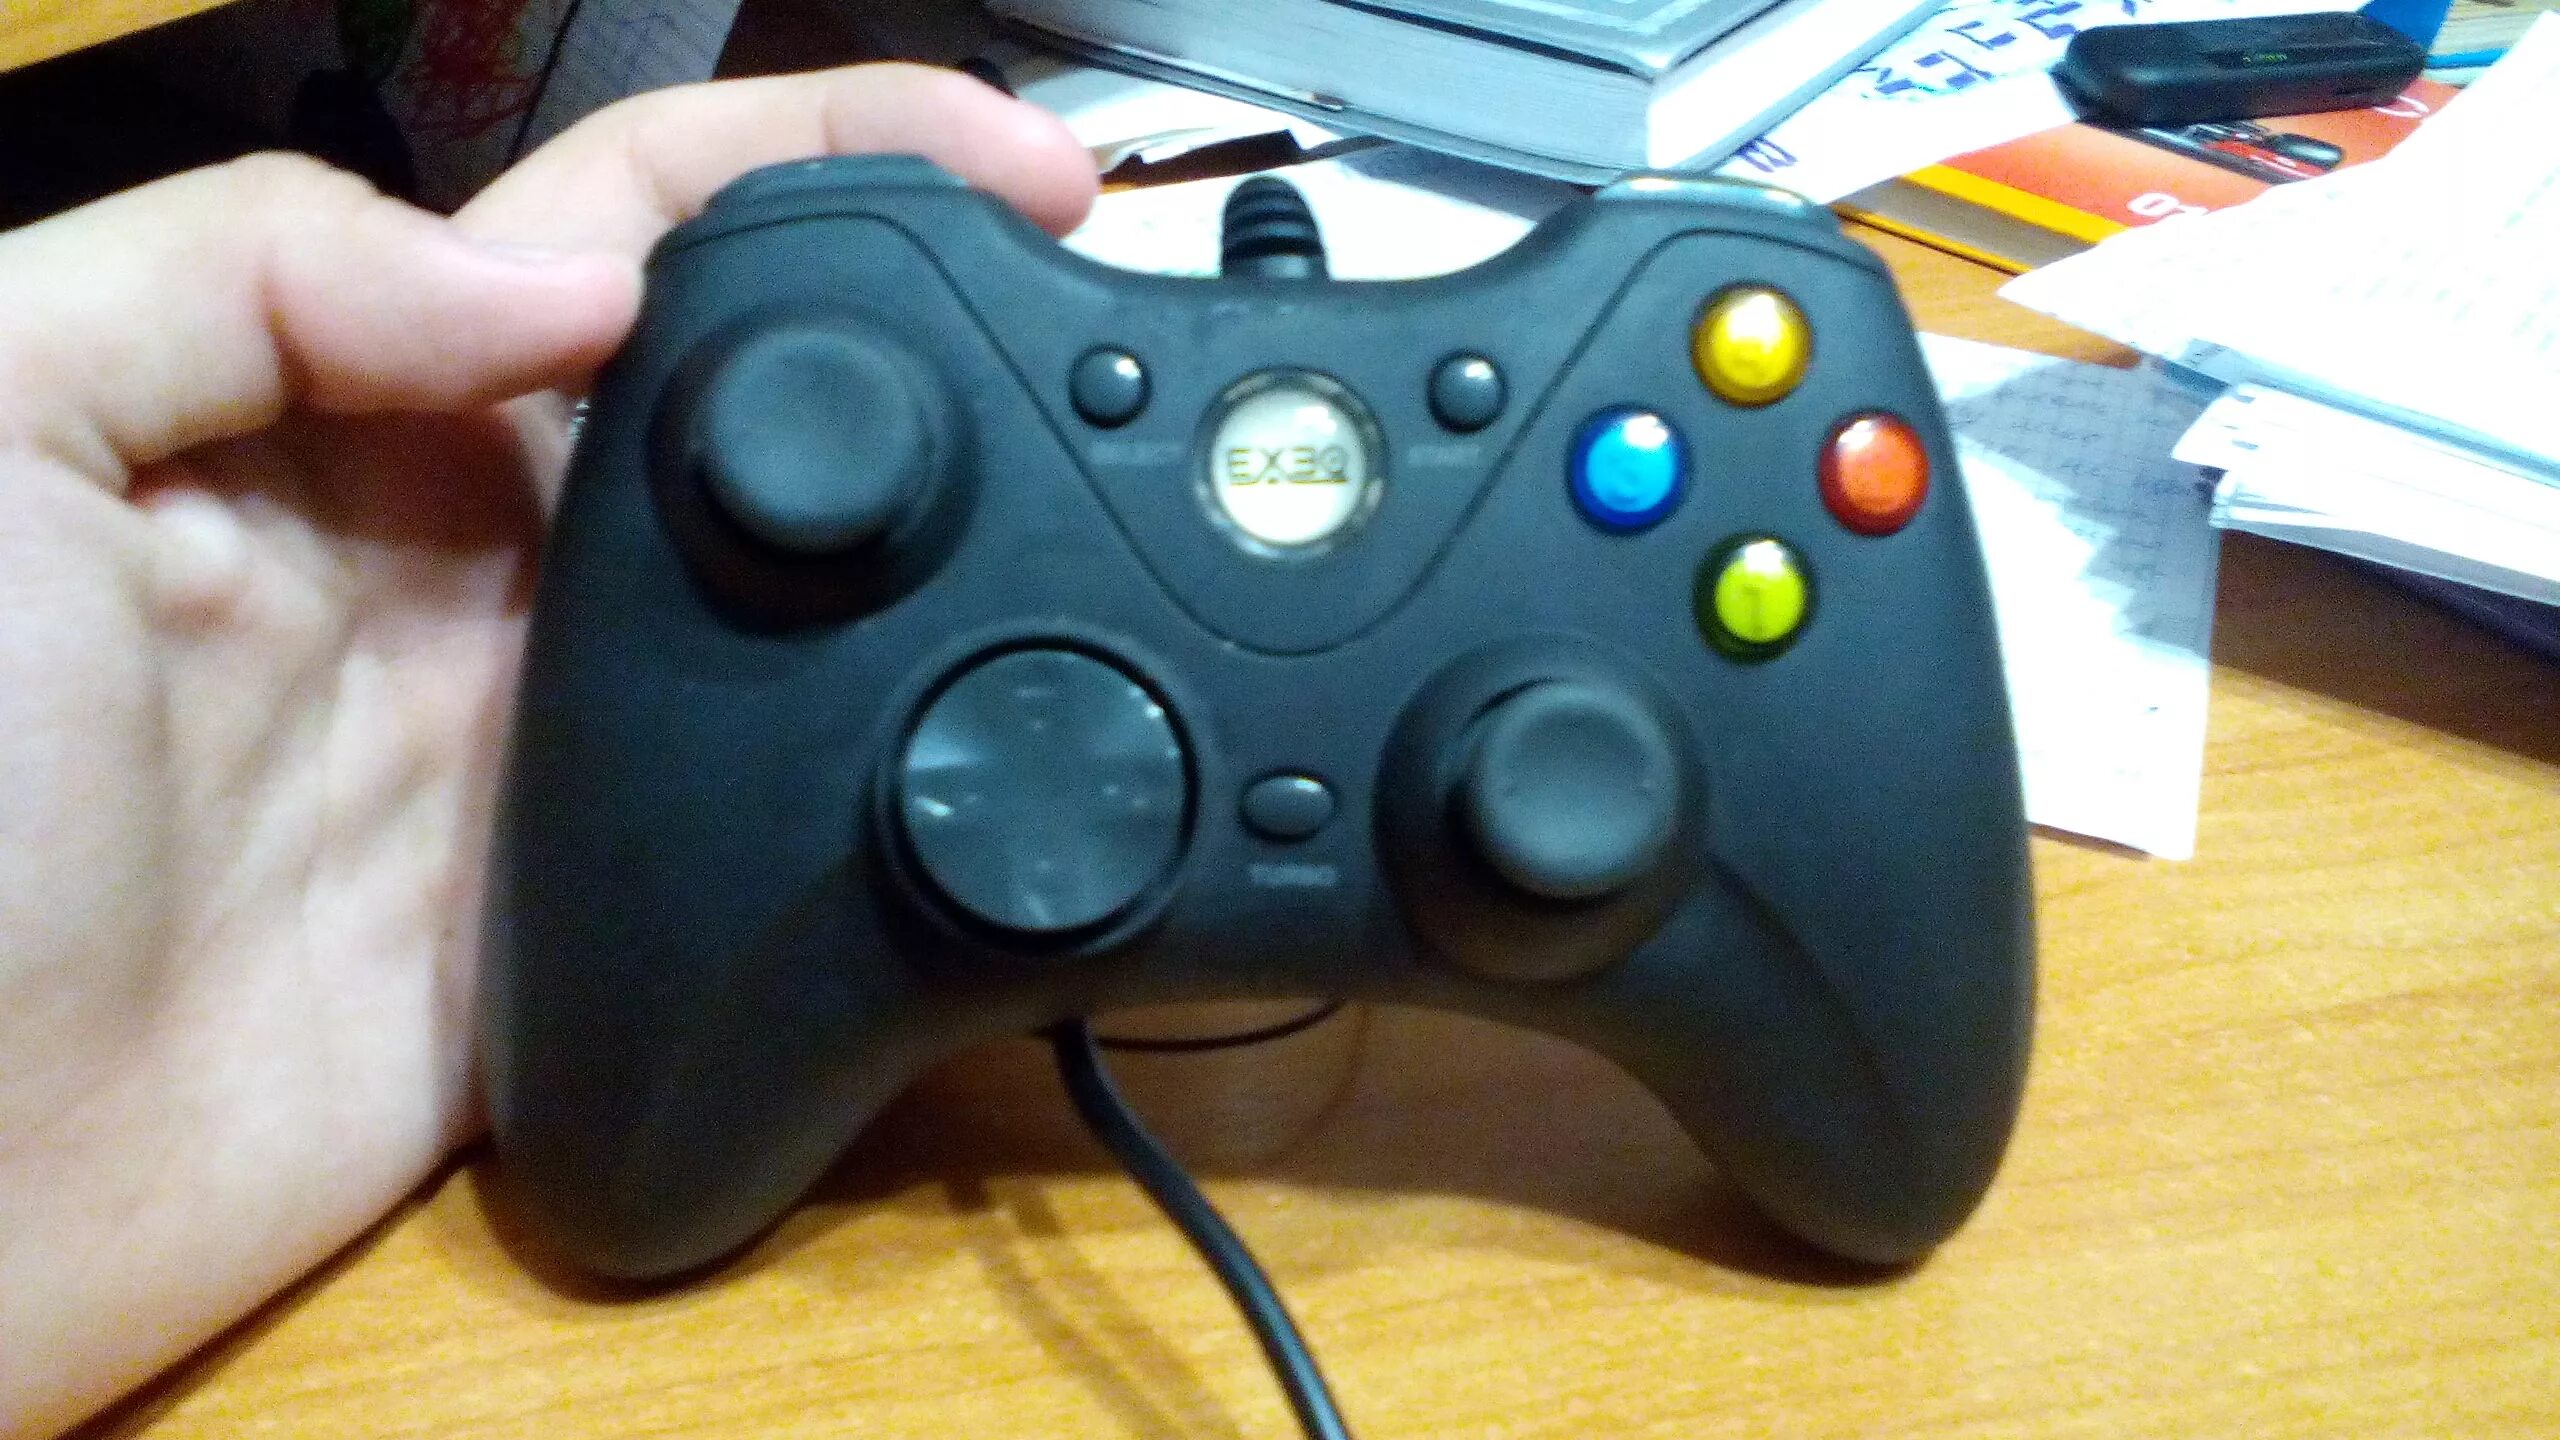 Джойстик DC Xbox 360. Lb на джойстике Xbox 360. Геймпад Hori Onyx Plus Wireless Controller ps4, черный. Кнопка RB на джойстике Xbox 360. Подключение джойстика xbox 360